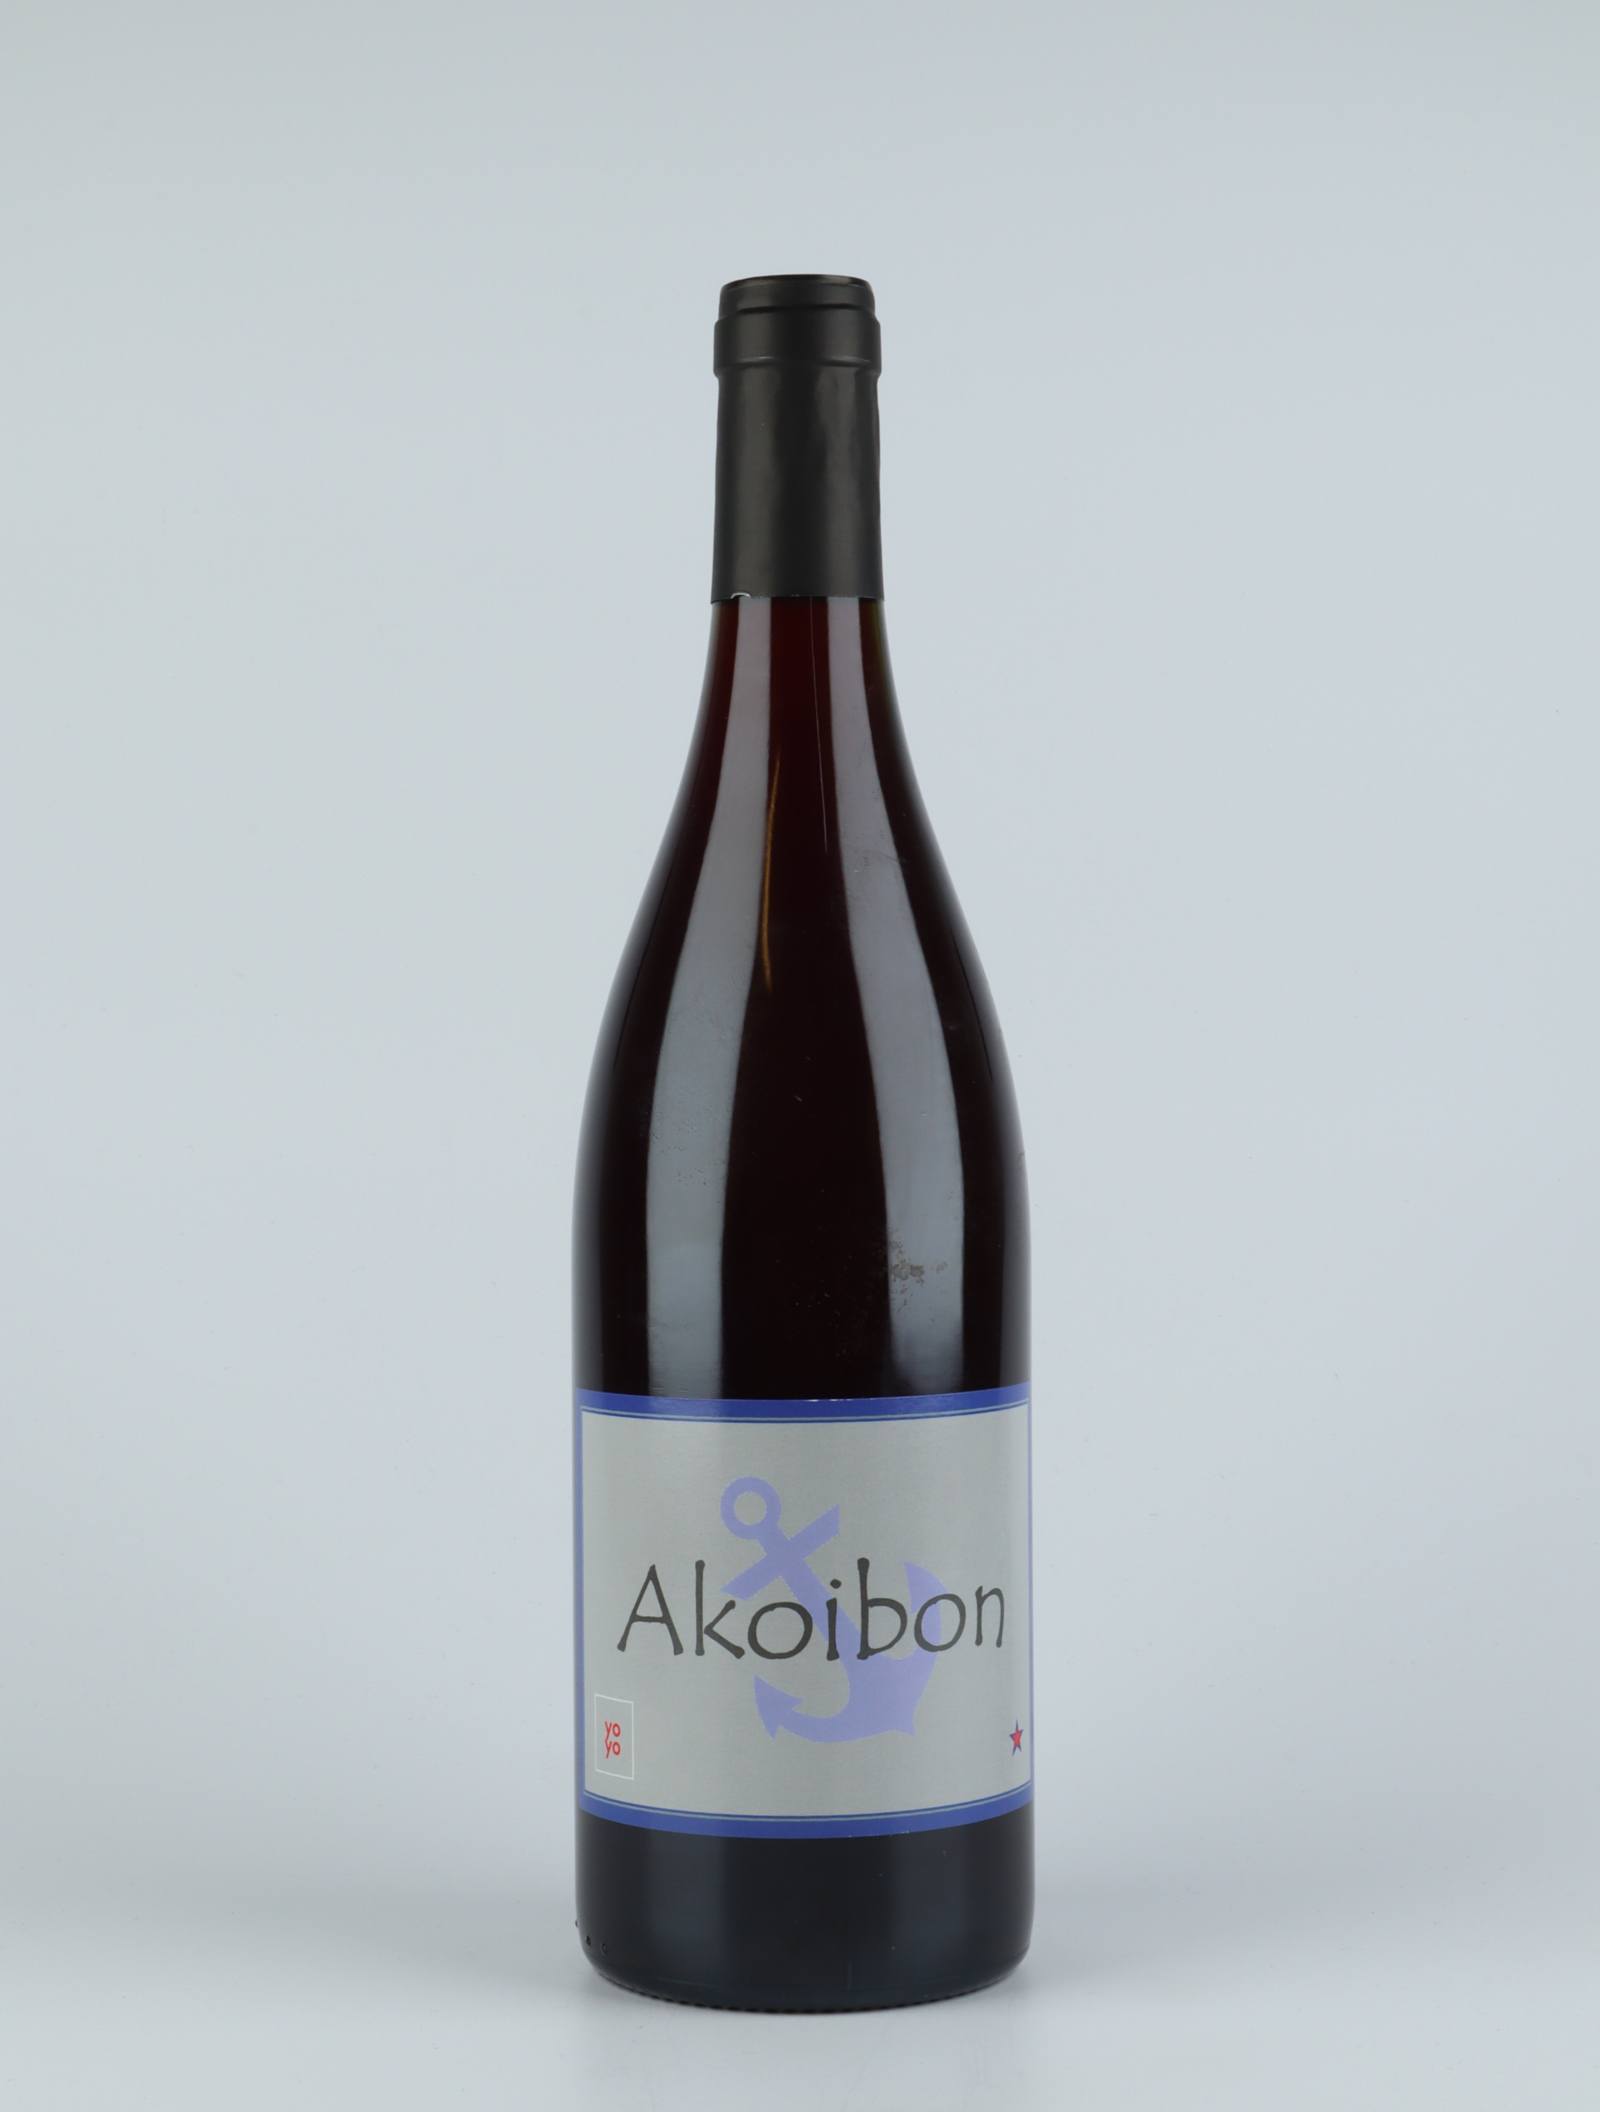 En flaske 2019 Akoibon Rødvin fra Domaine Yoyo, Rousillon i Frankrig